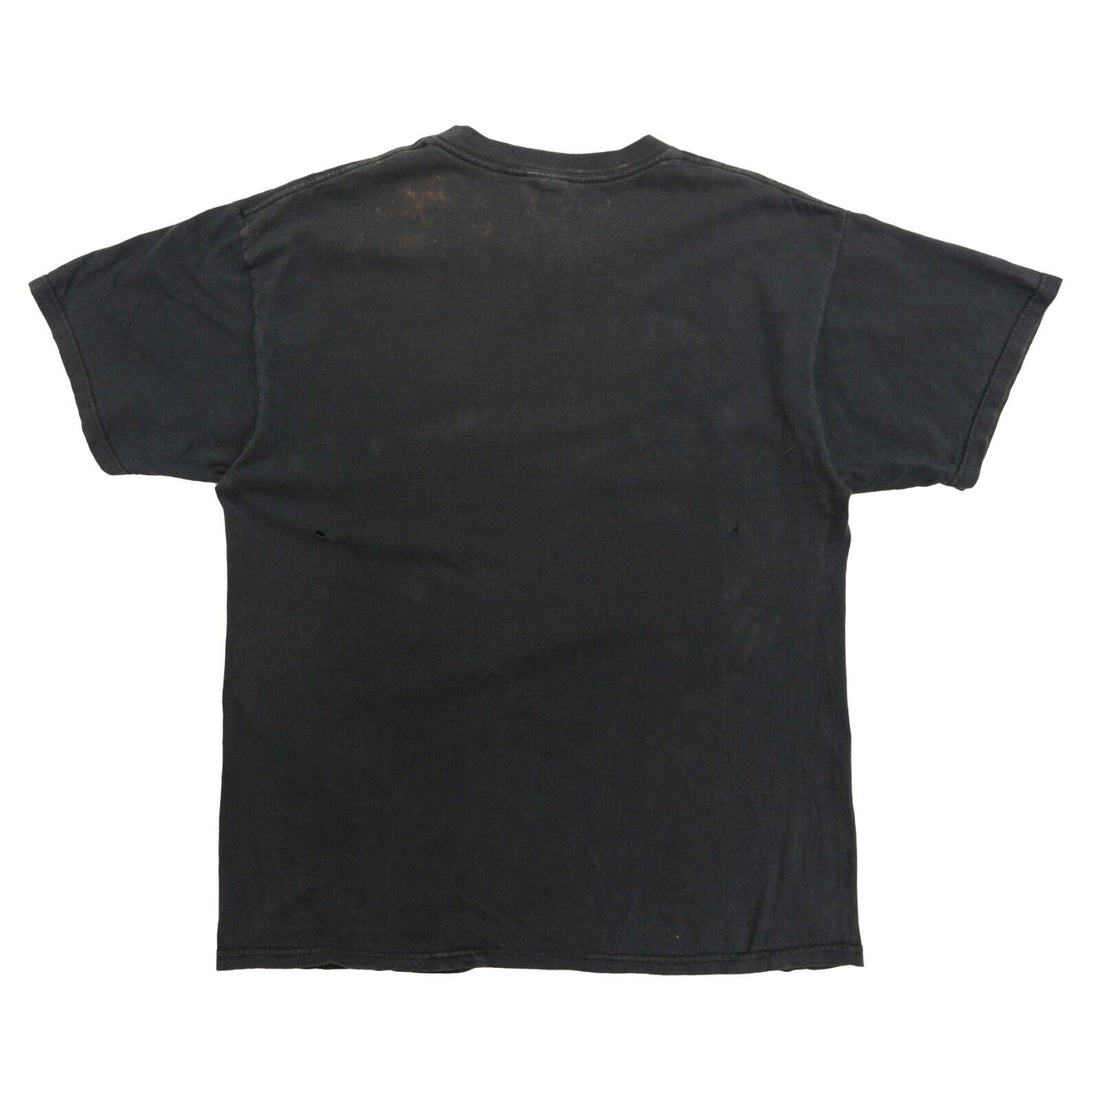 Vintage Marilyn Manson T-Shirt Size Large Black Rock Band Tee 2001 Y2K